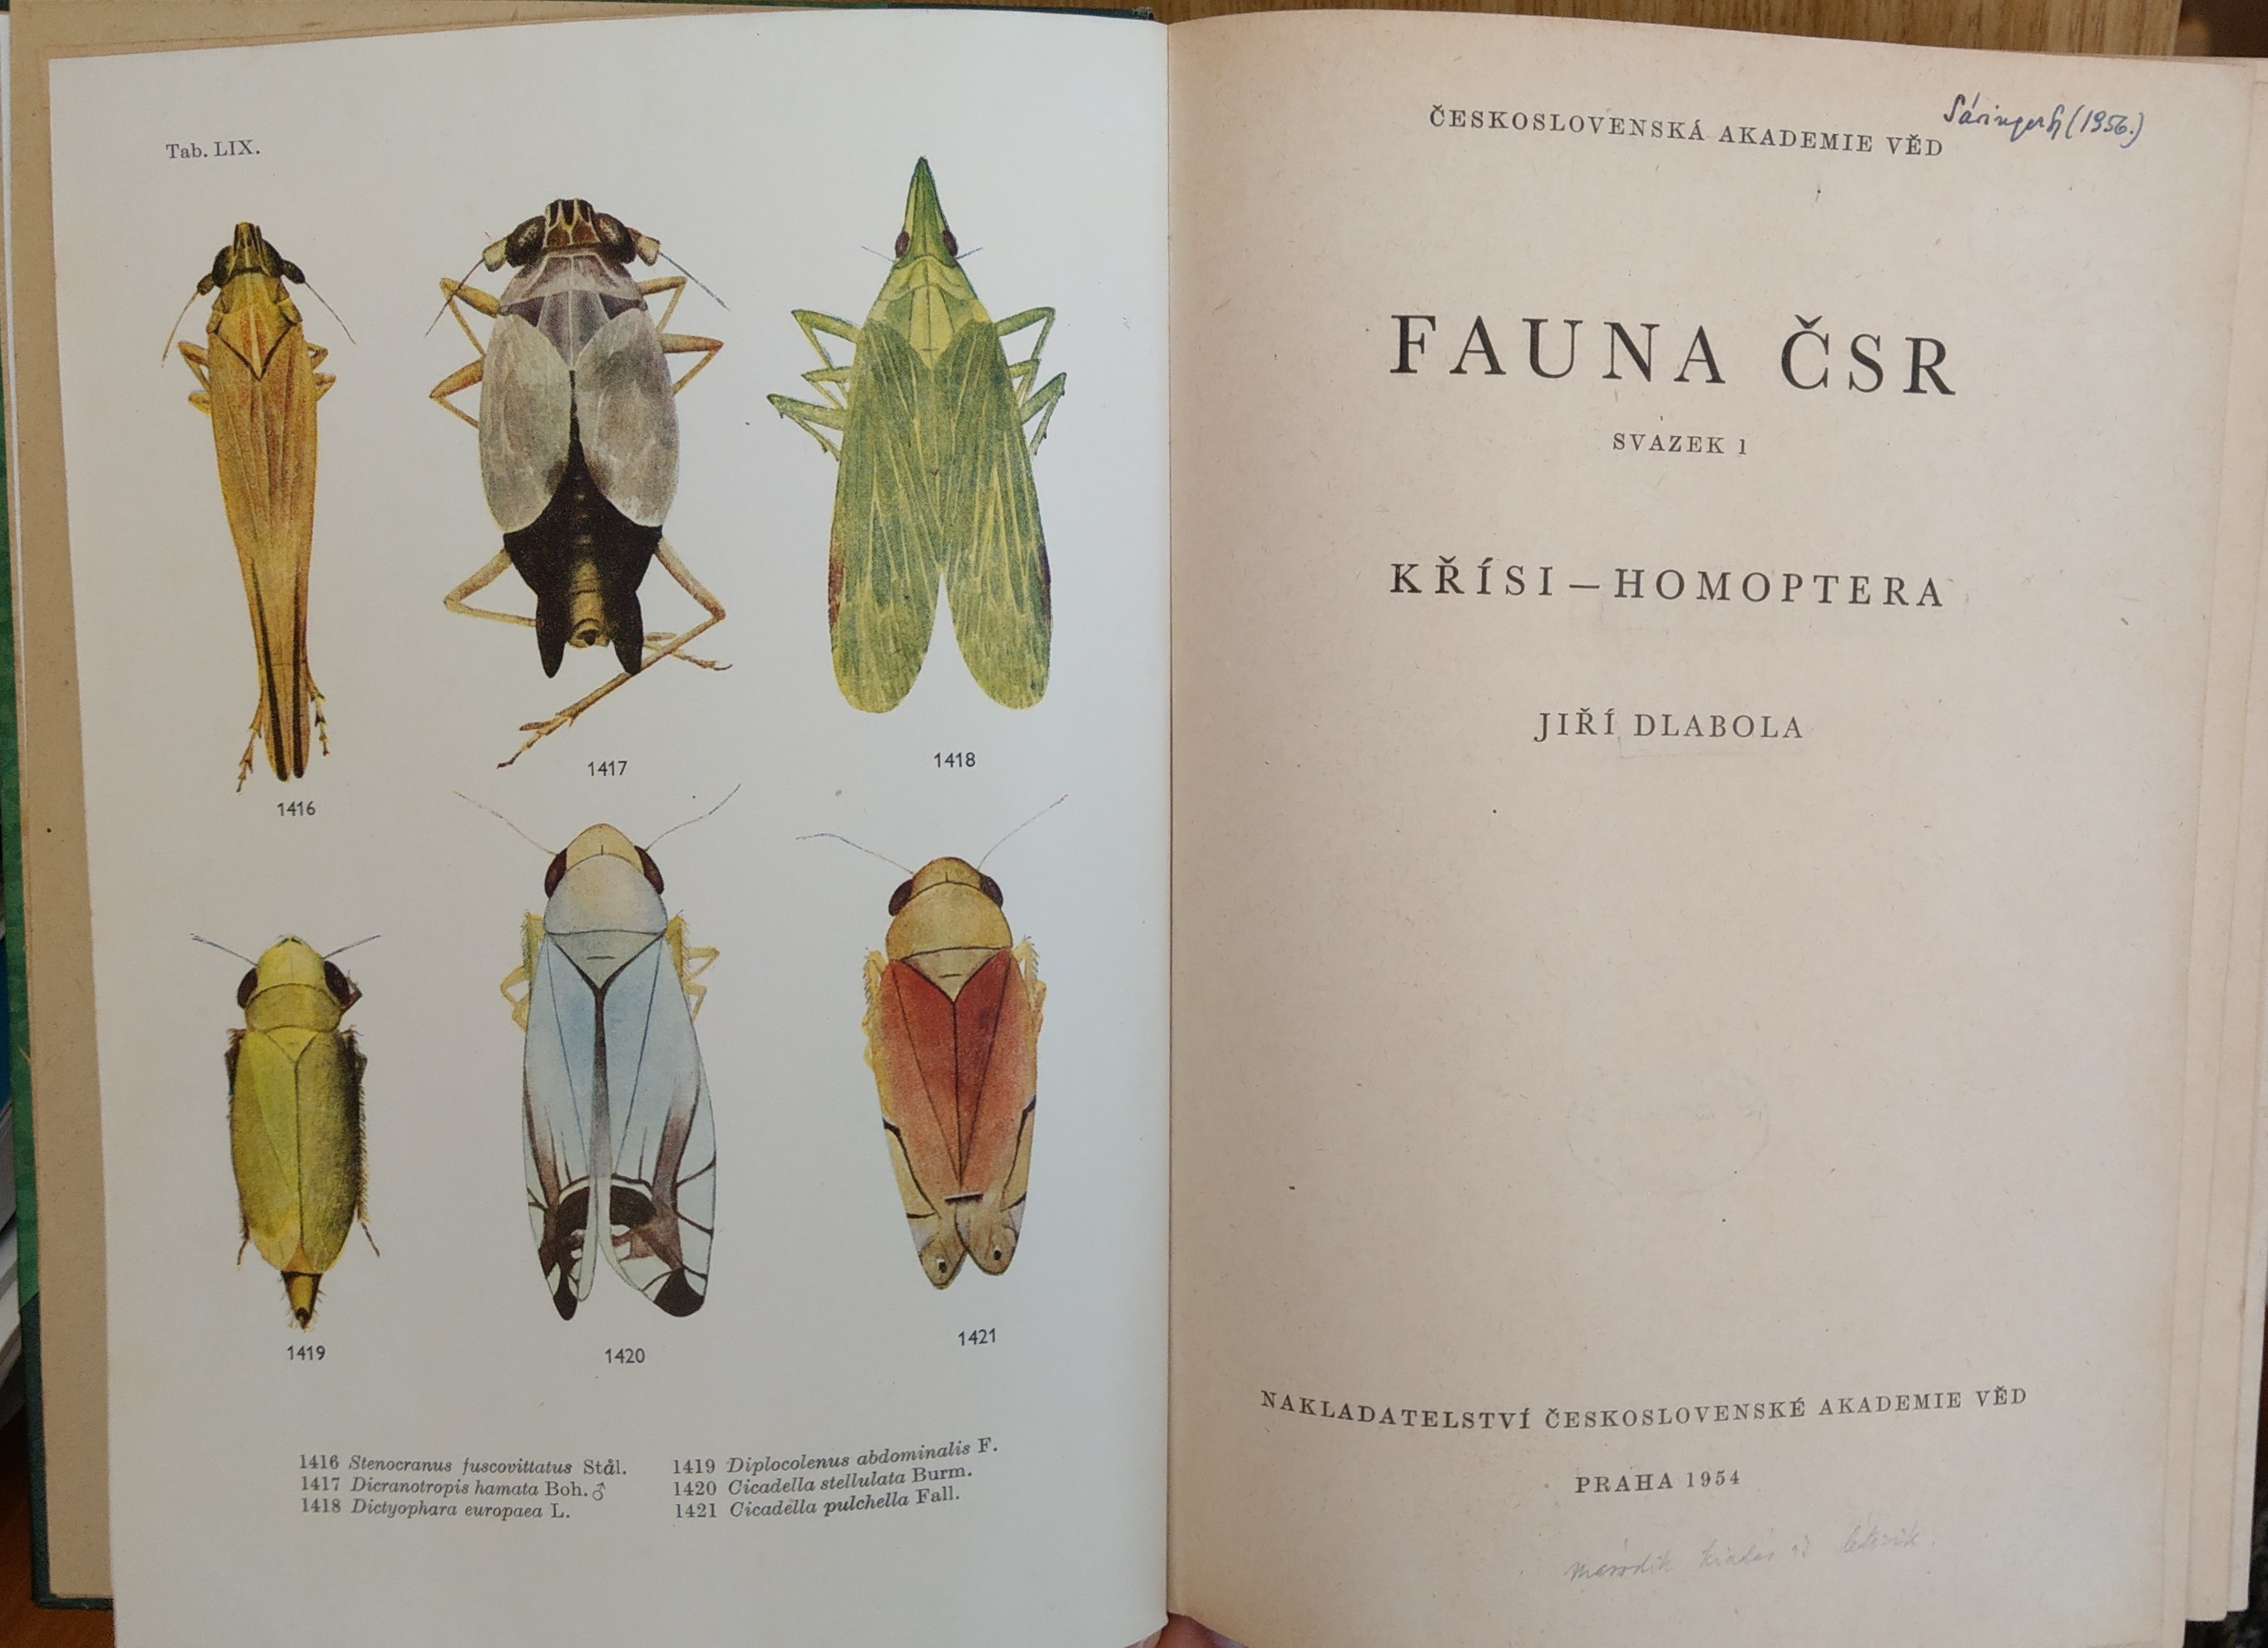 Jiří Dlabola: Fauna ČSR. Sazek 1., Křísi - homoptera (Rippl-Rónai Múzeum CC BY-NC-ND)